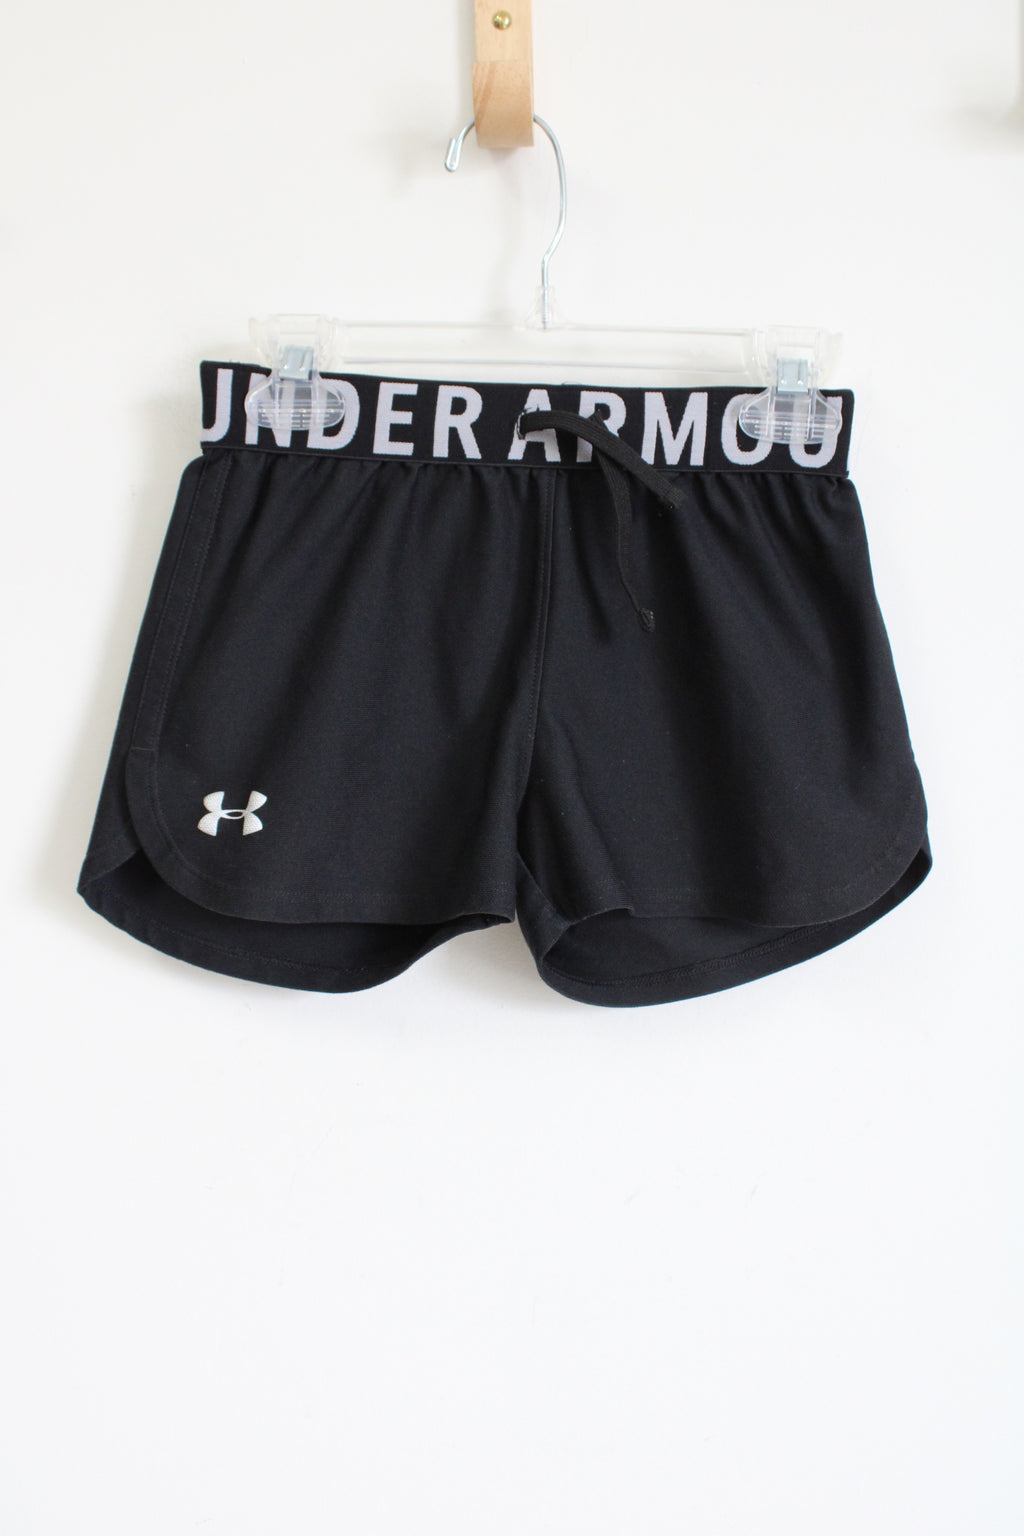 Under Armour Black Athletic Shorts | 8